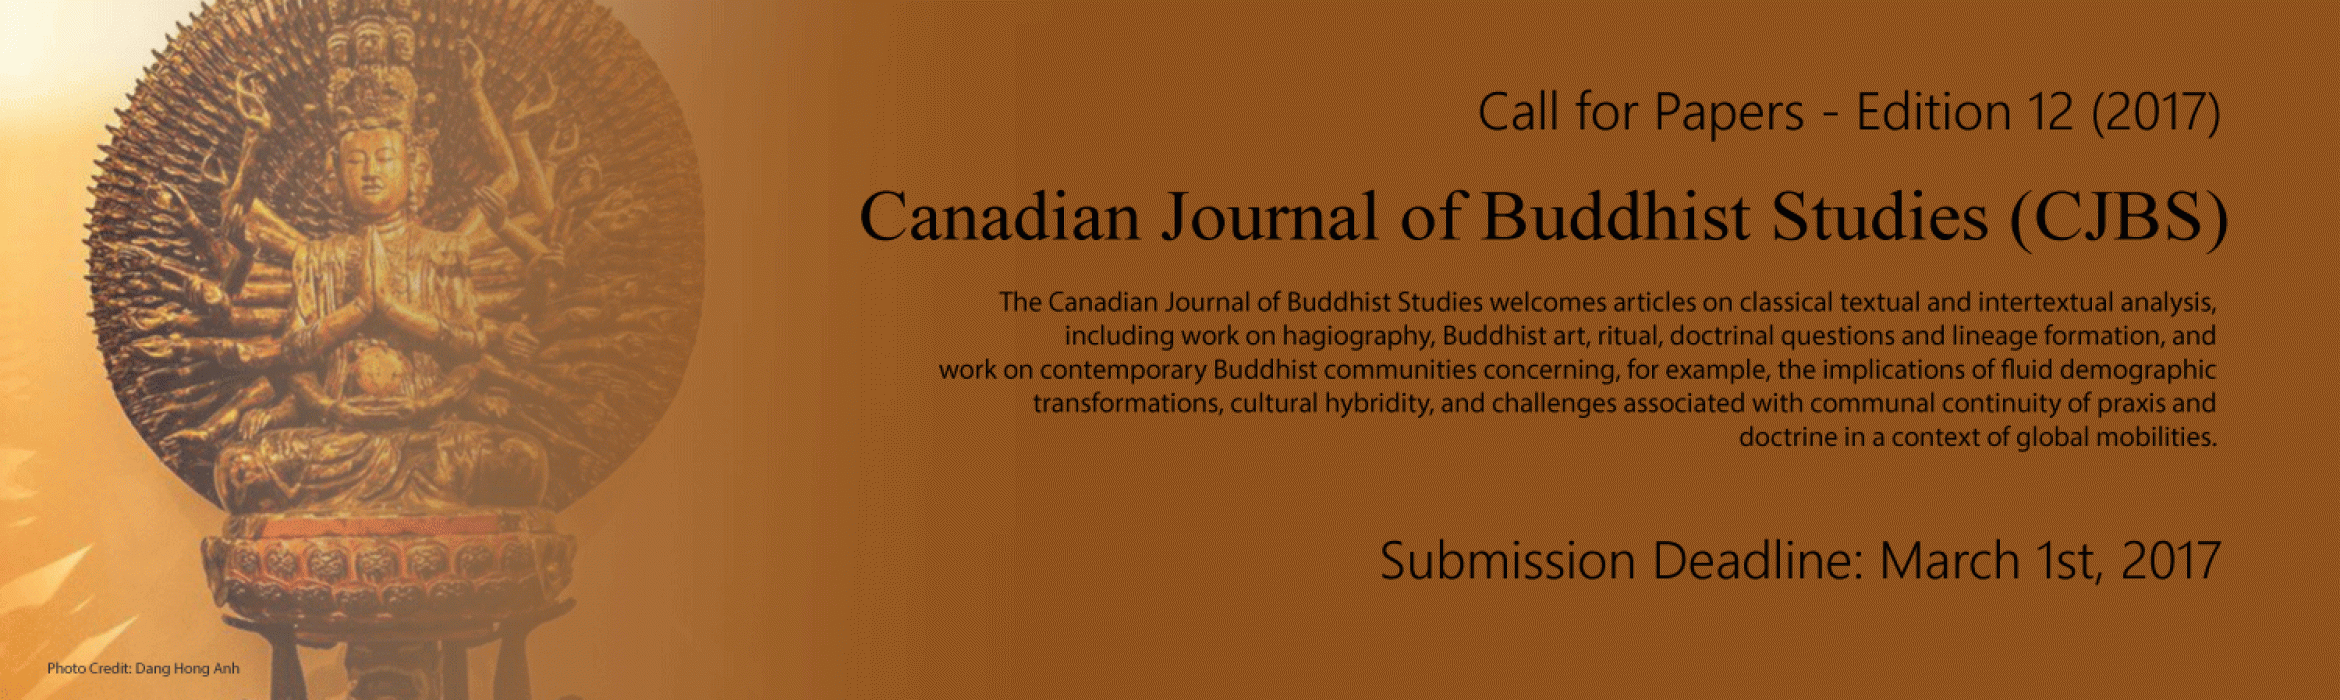 Canadian Journal of Buddhist Studies CFP 2017